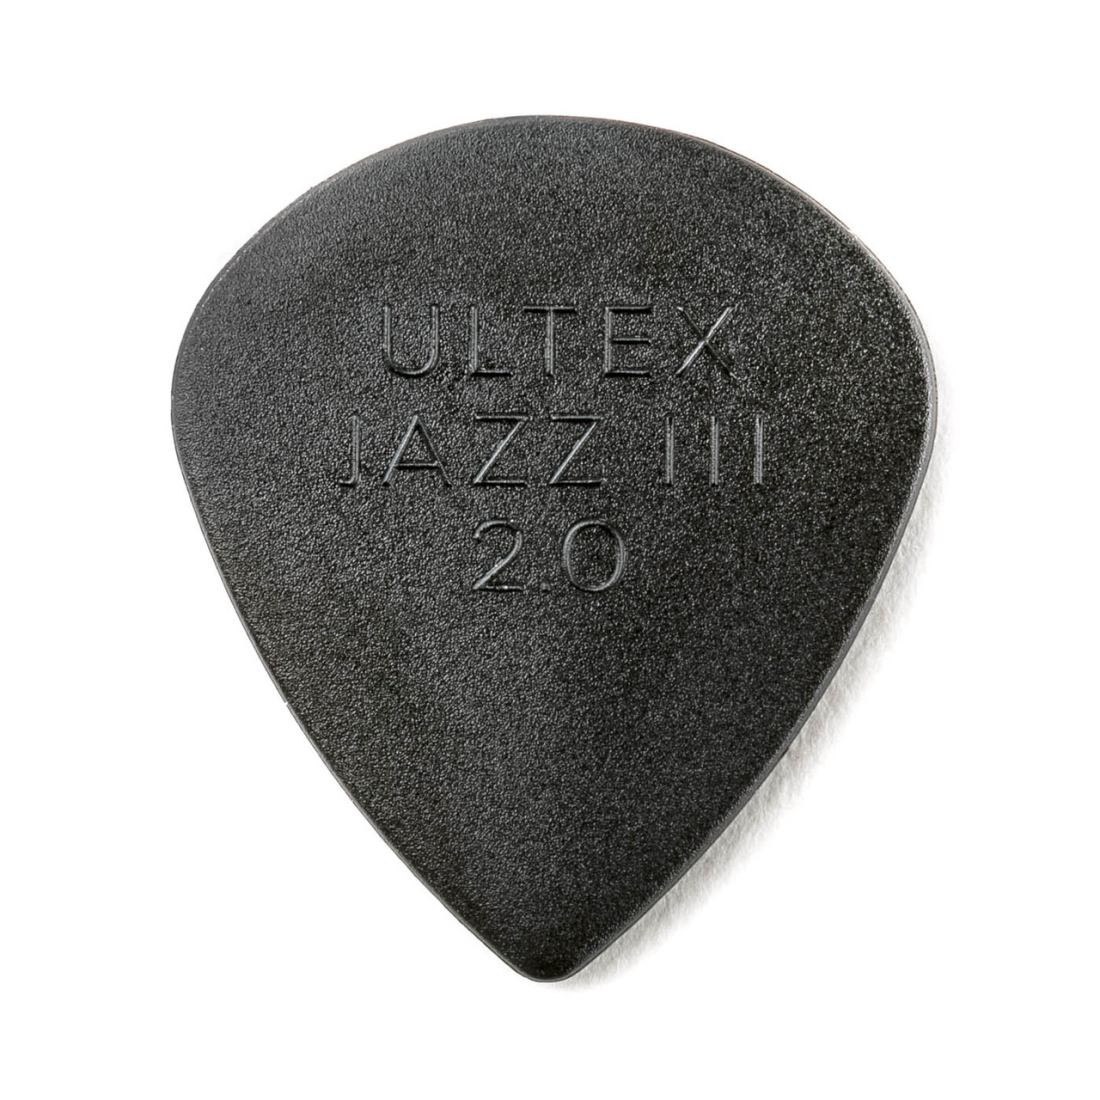 Ultex Jazz III Players Pack (24 Pack) - 2.0mm